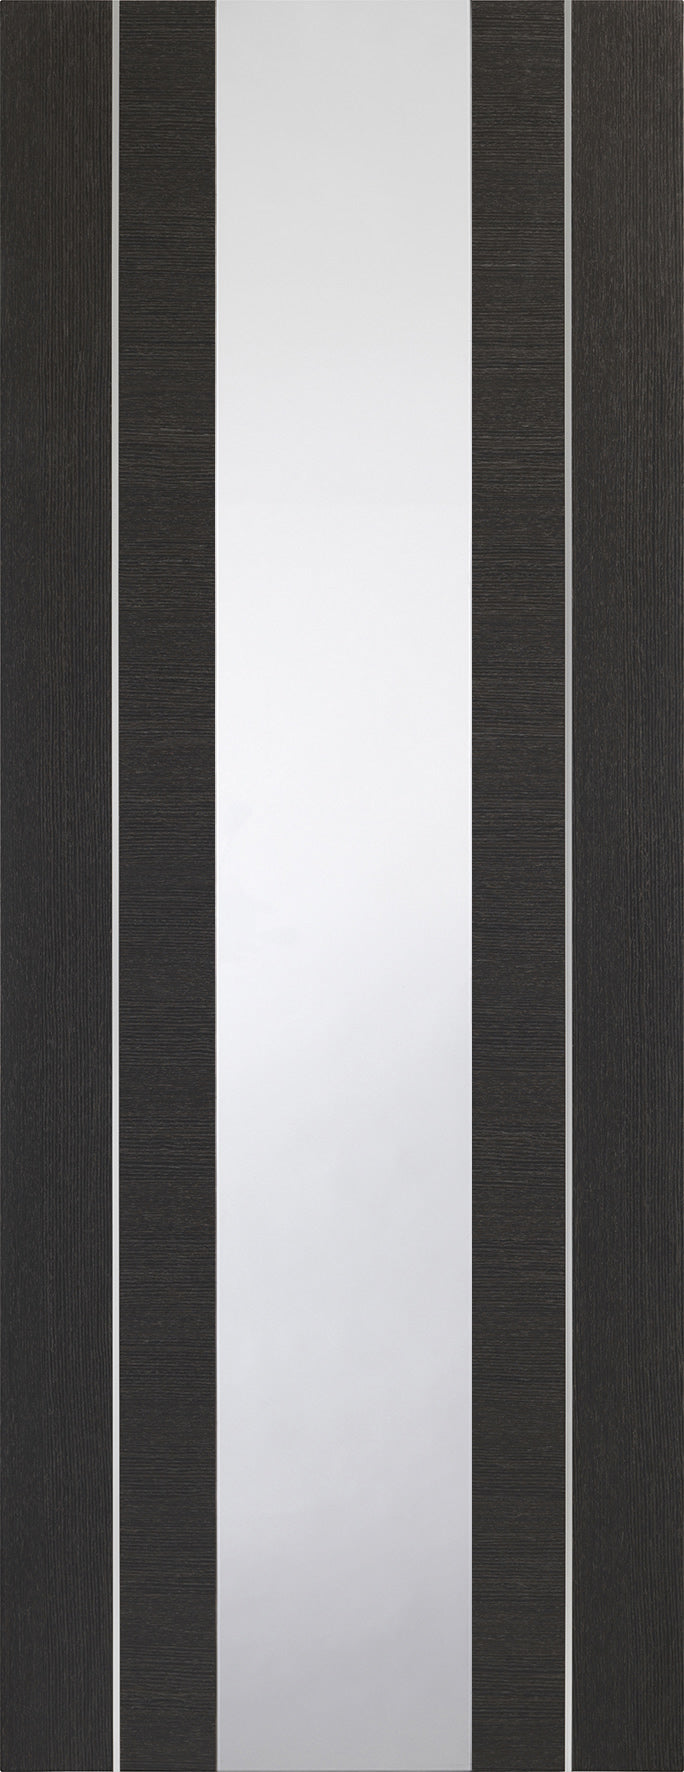 Forli dark grey Internal  door with aluminium inlays and clear glass.